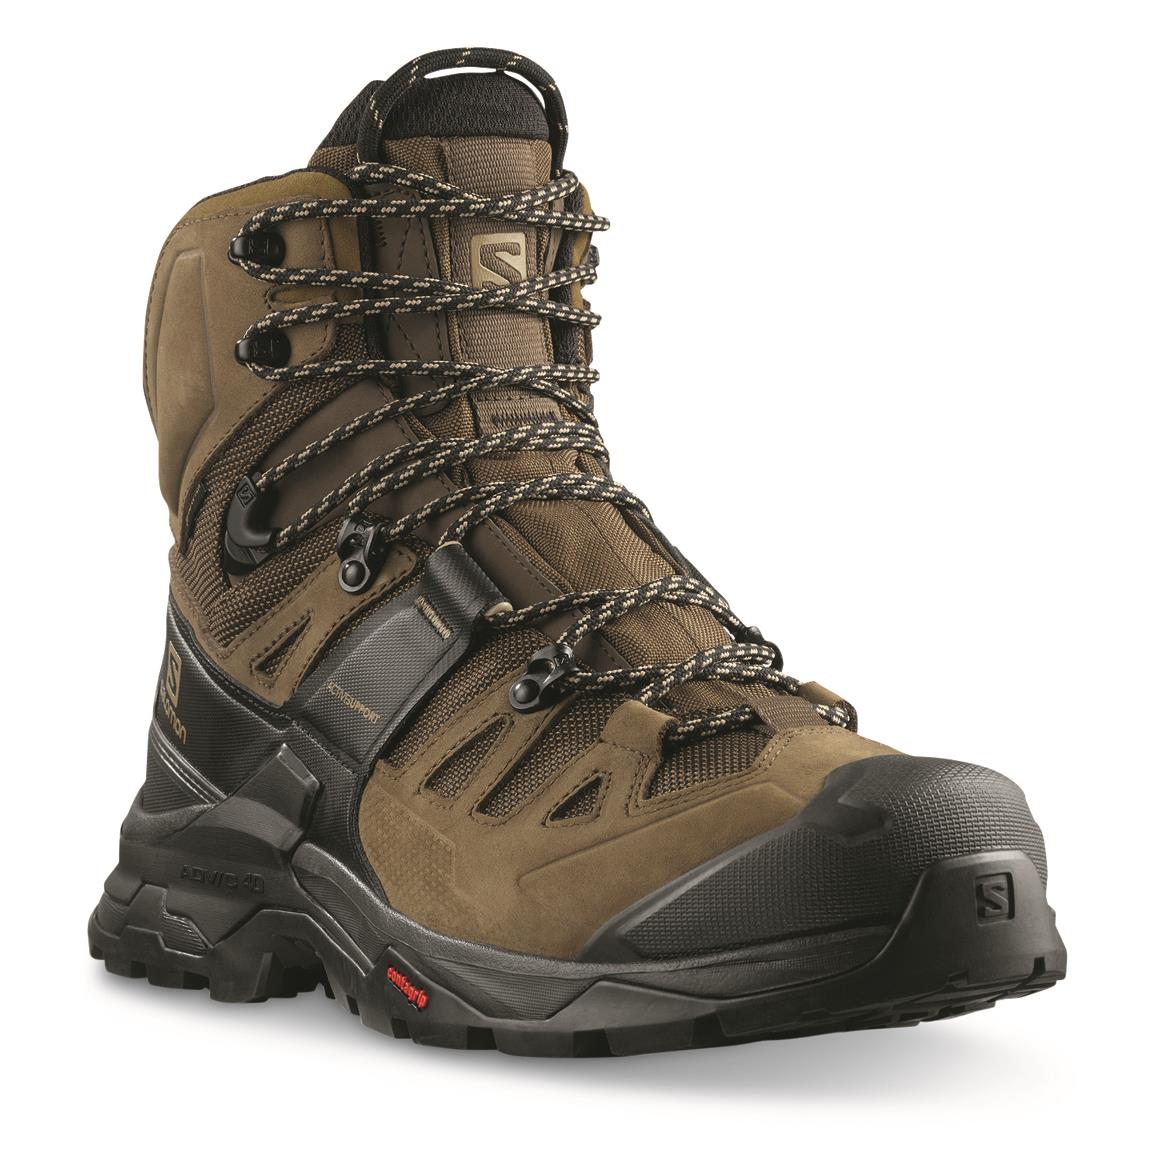 Salomon Men's Quest 4 GORE-TEX Waterproof Hiking Boots, Desert Palm/black/kelp